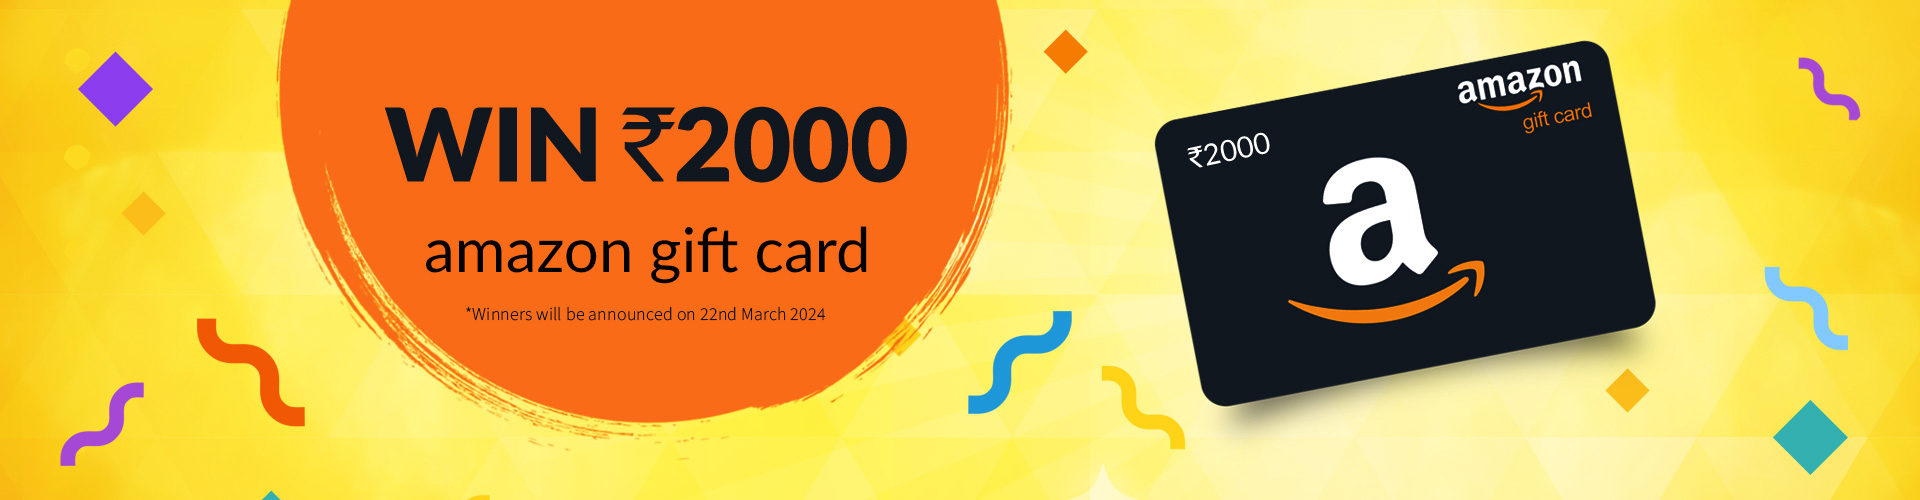 Win a Free Amazon gift card Worth `2000 Courtesy of Brightsun Travel  